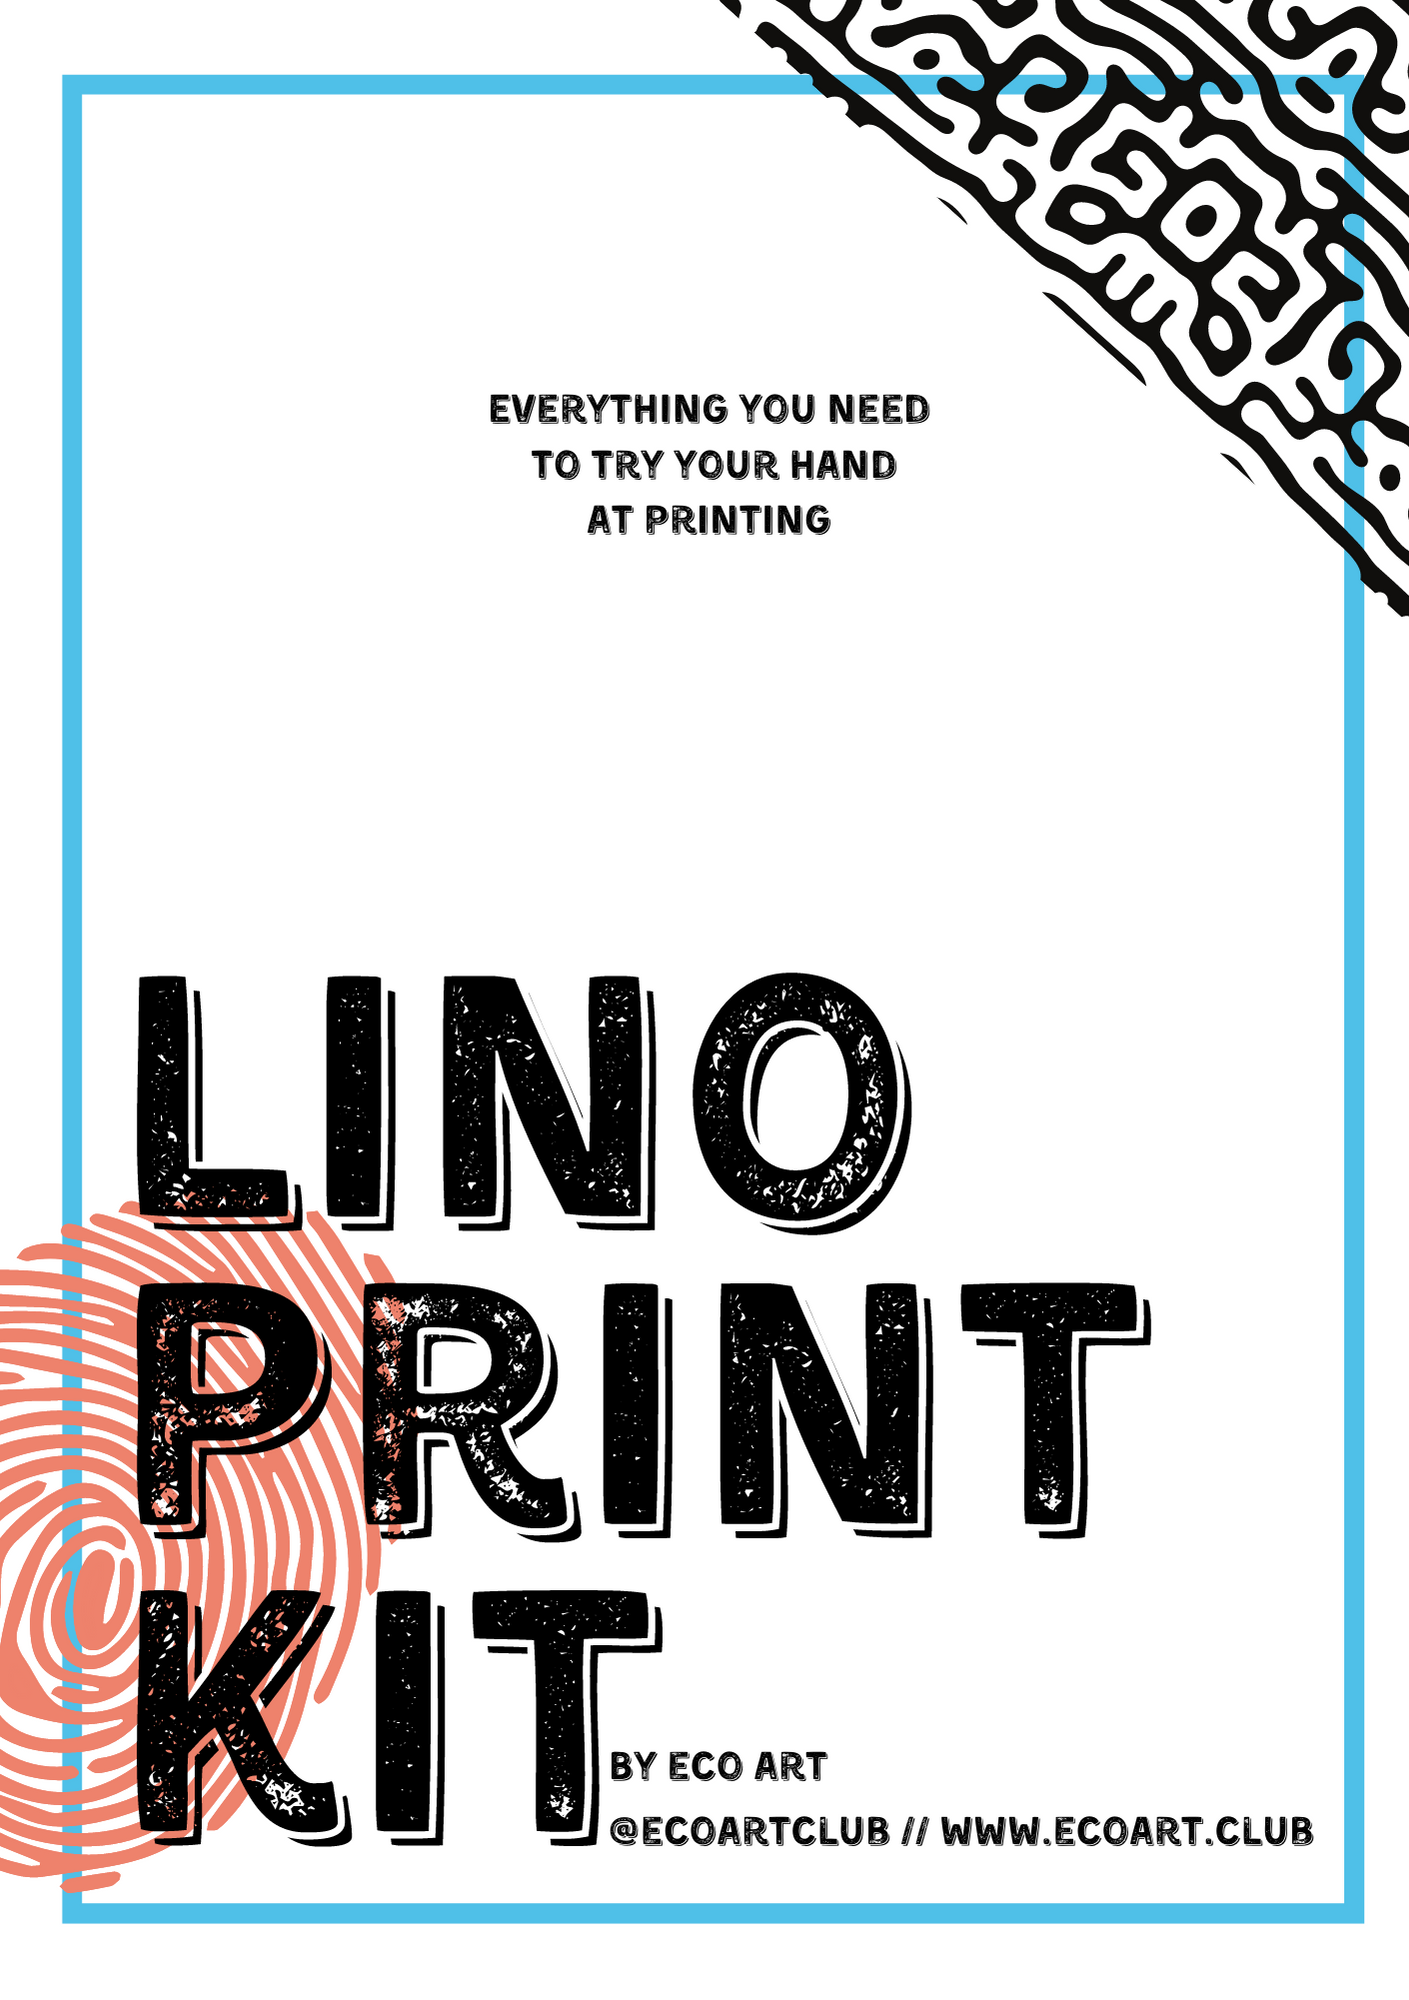 Complete Lino Print Kit